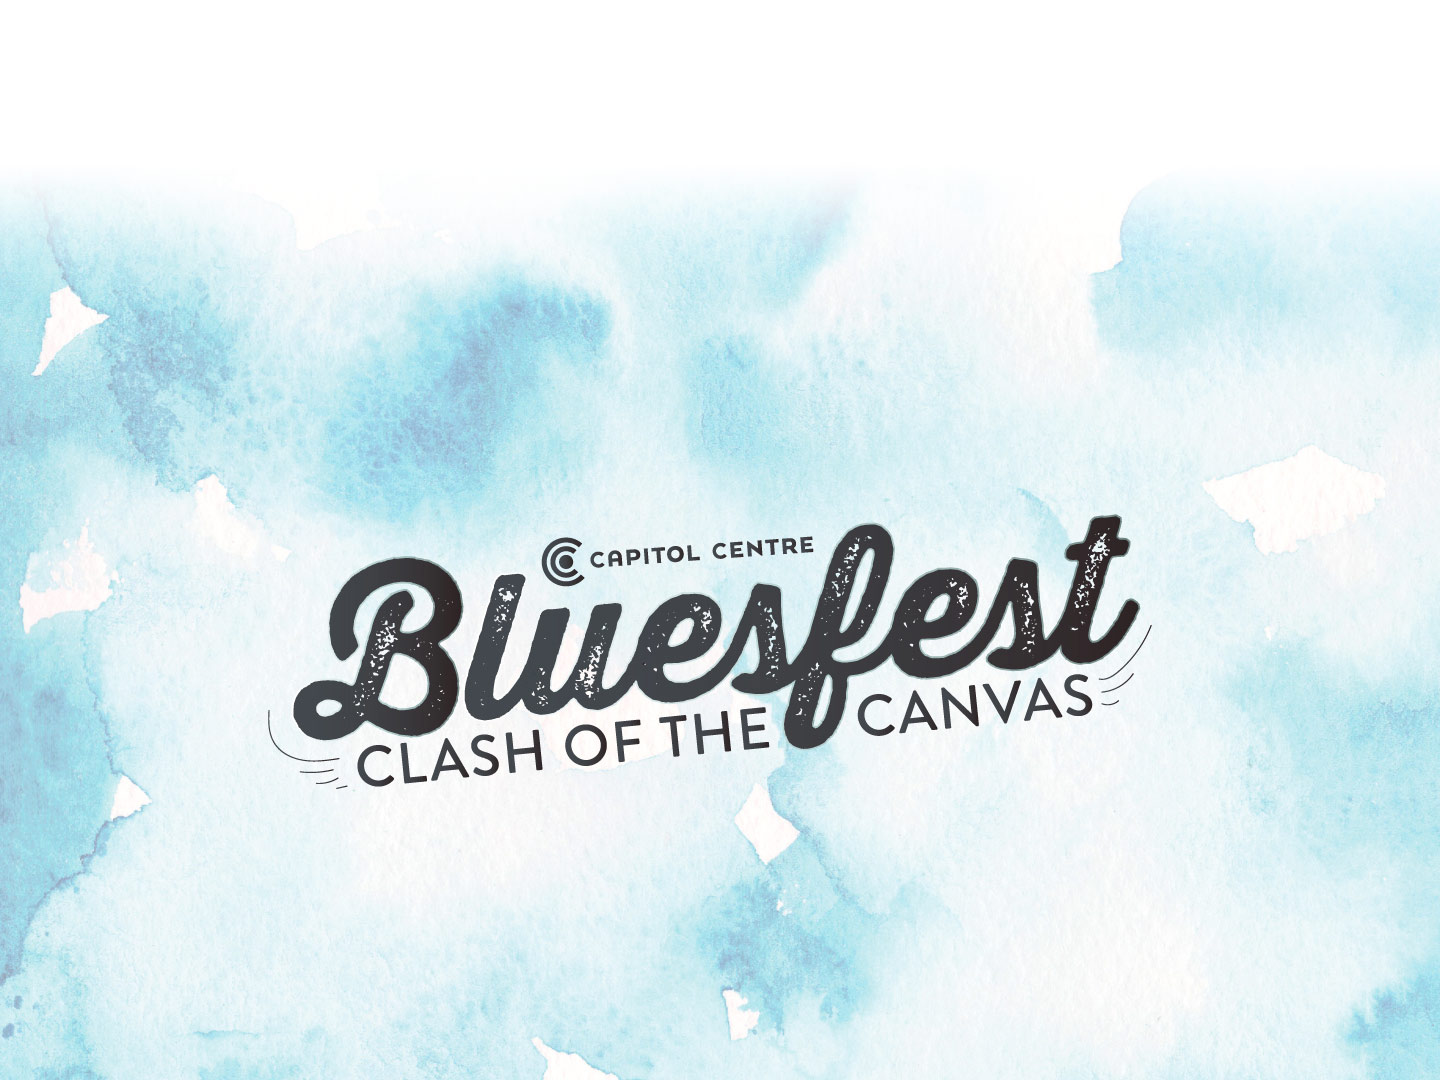 Capitol Centre Bluesfest presents: Clash of the Canvas Blues Edition